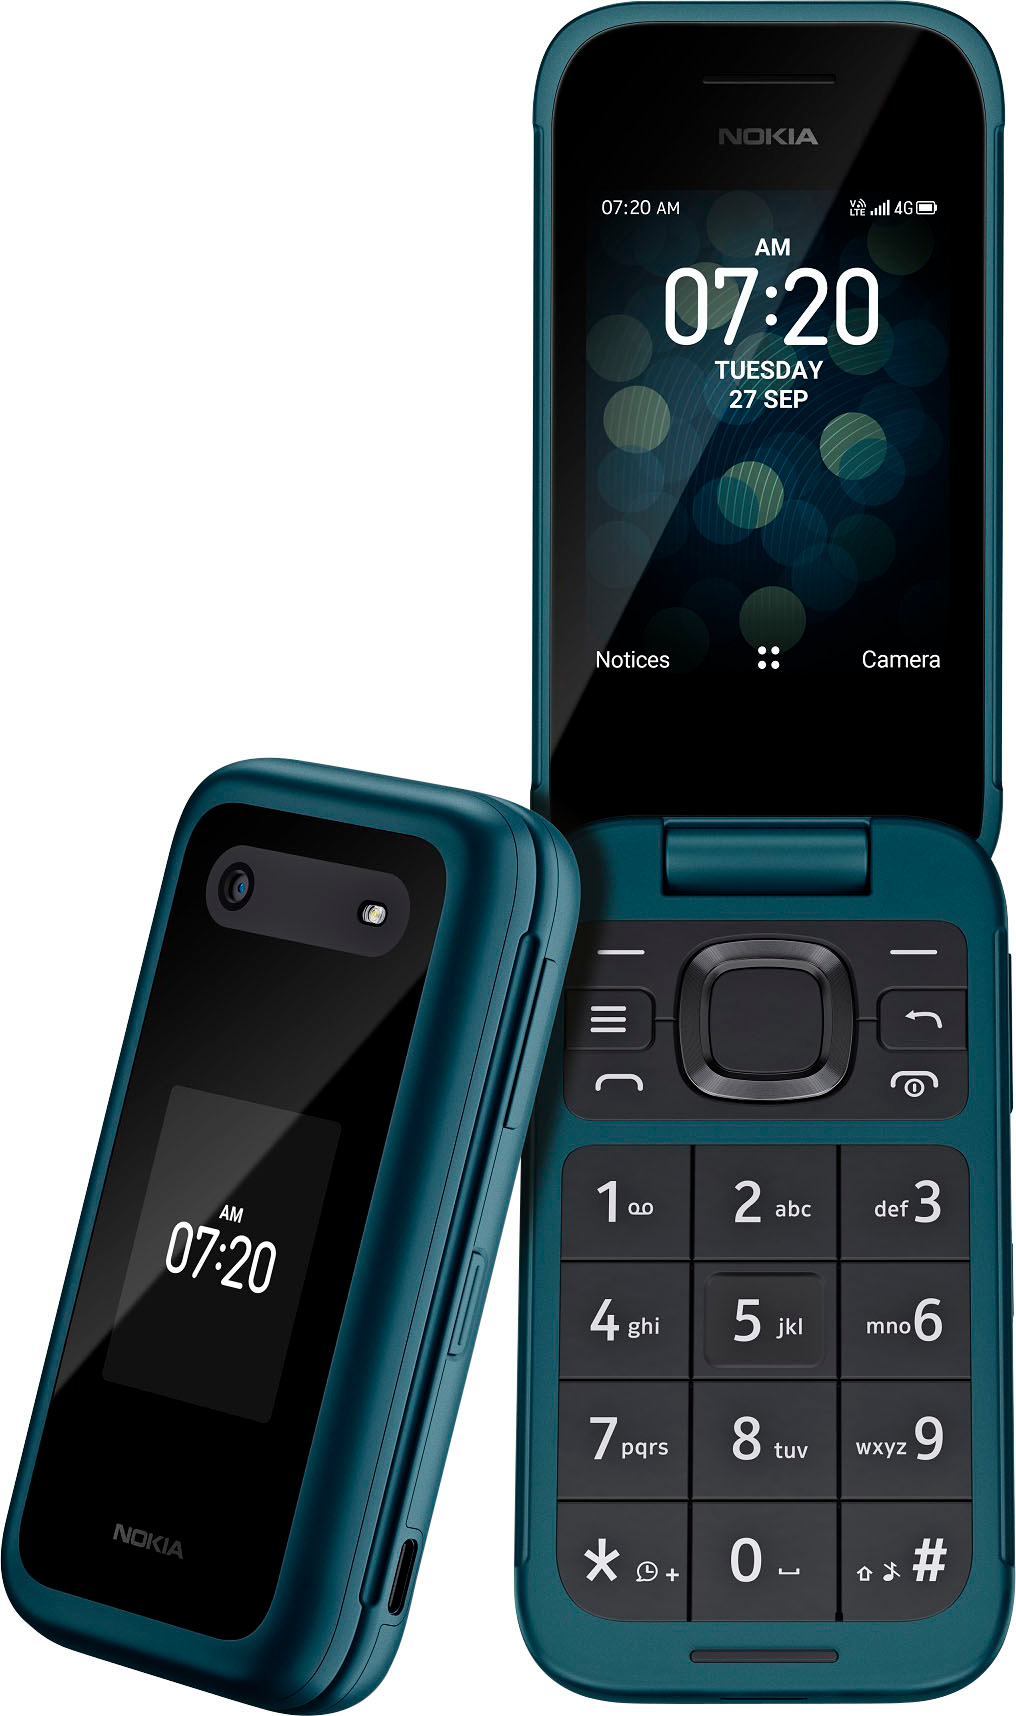 Nokia 2780 Flip feature mobile phone